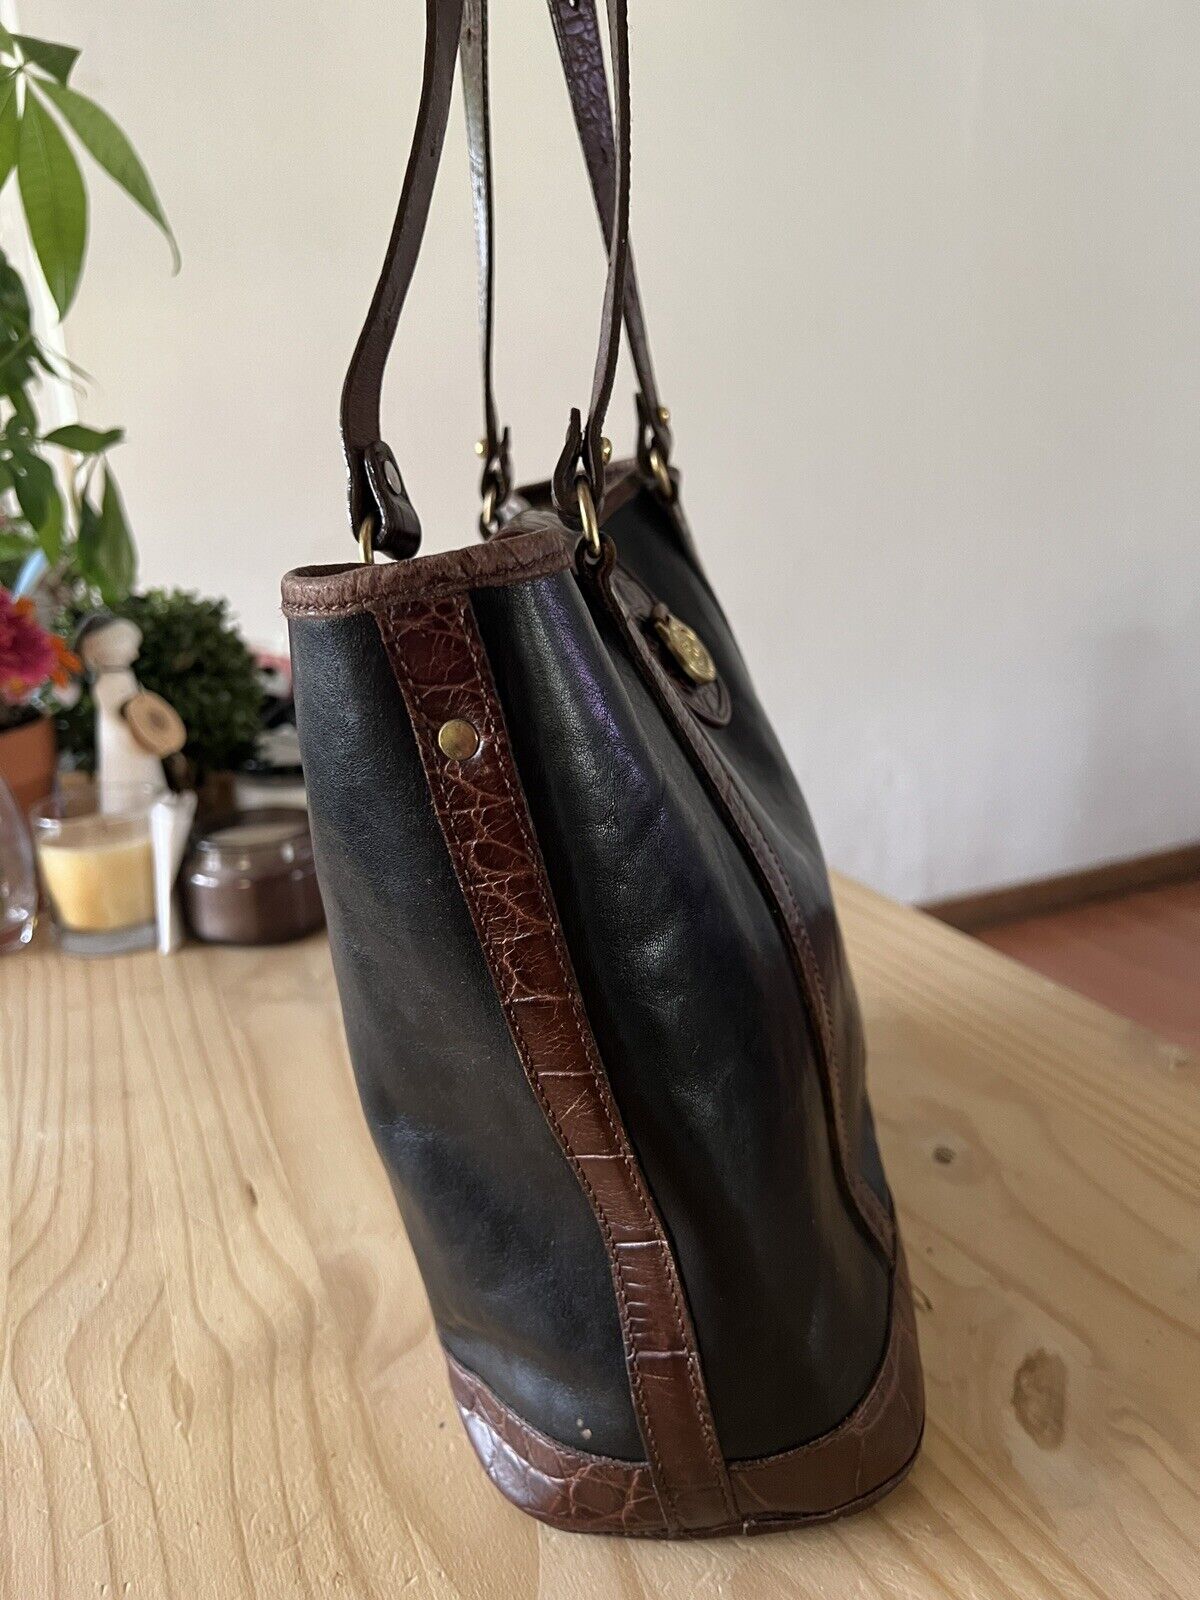 Brahmin Vintage Black/ Brown Leather Handbag Purse